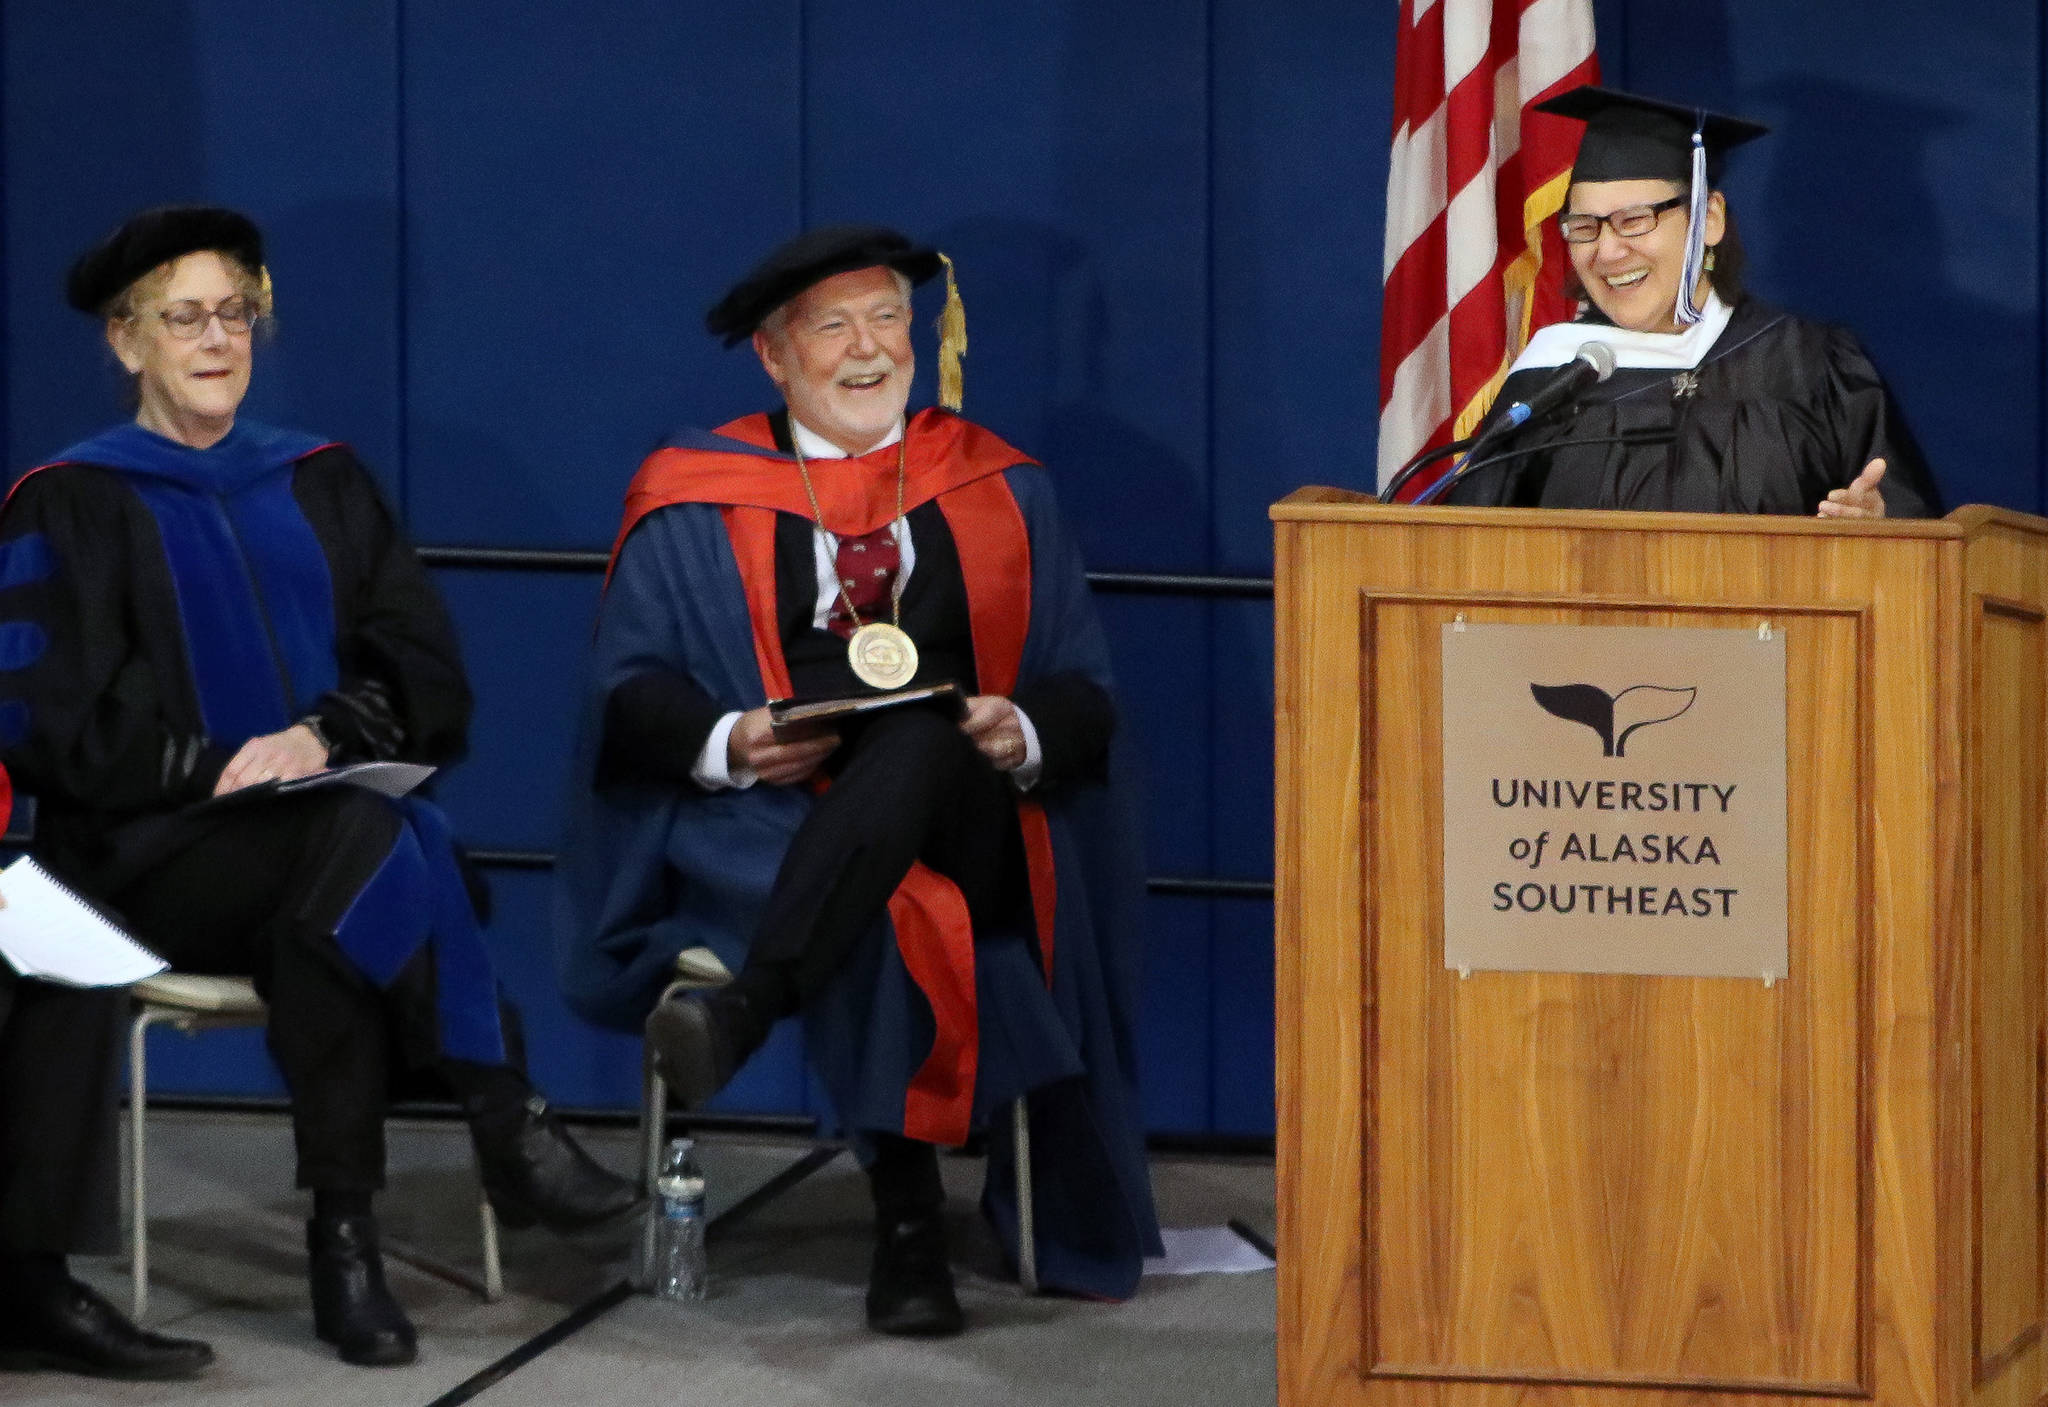 Commencement speaker Valerie Nurr’araaluk Davidson speaks during the University of Alaska Southeast commencement ceremony on Sunday, May 5, 2019. (Erin Laughlin | For the Juneau Empire)